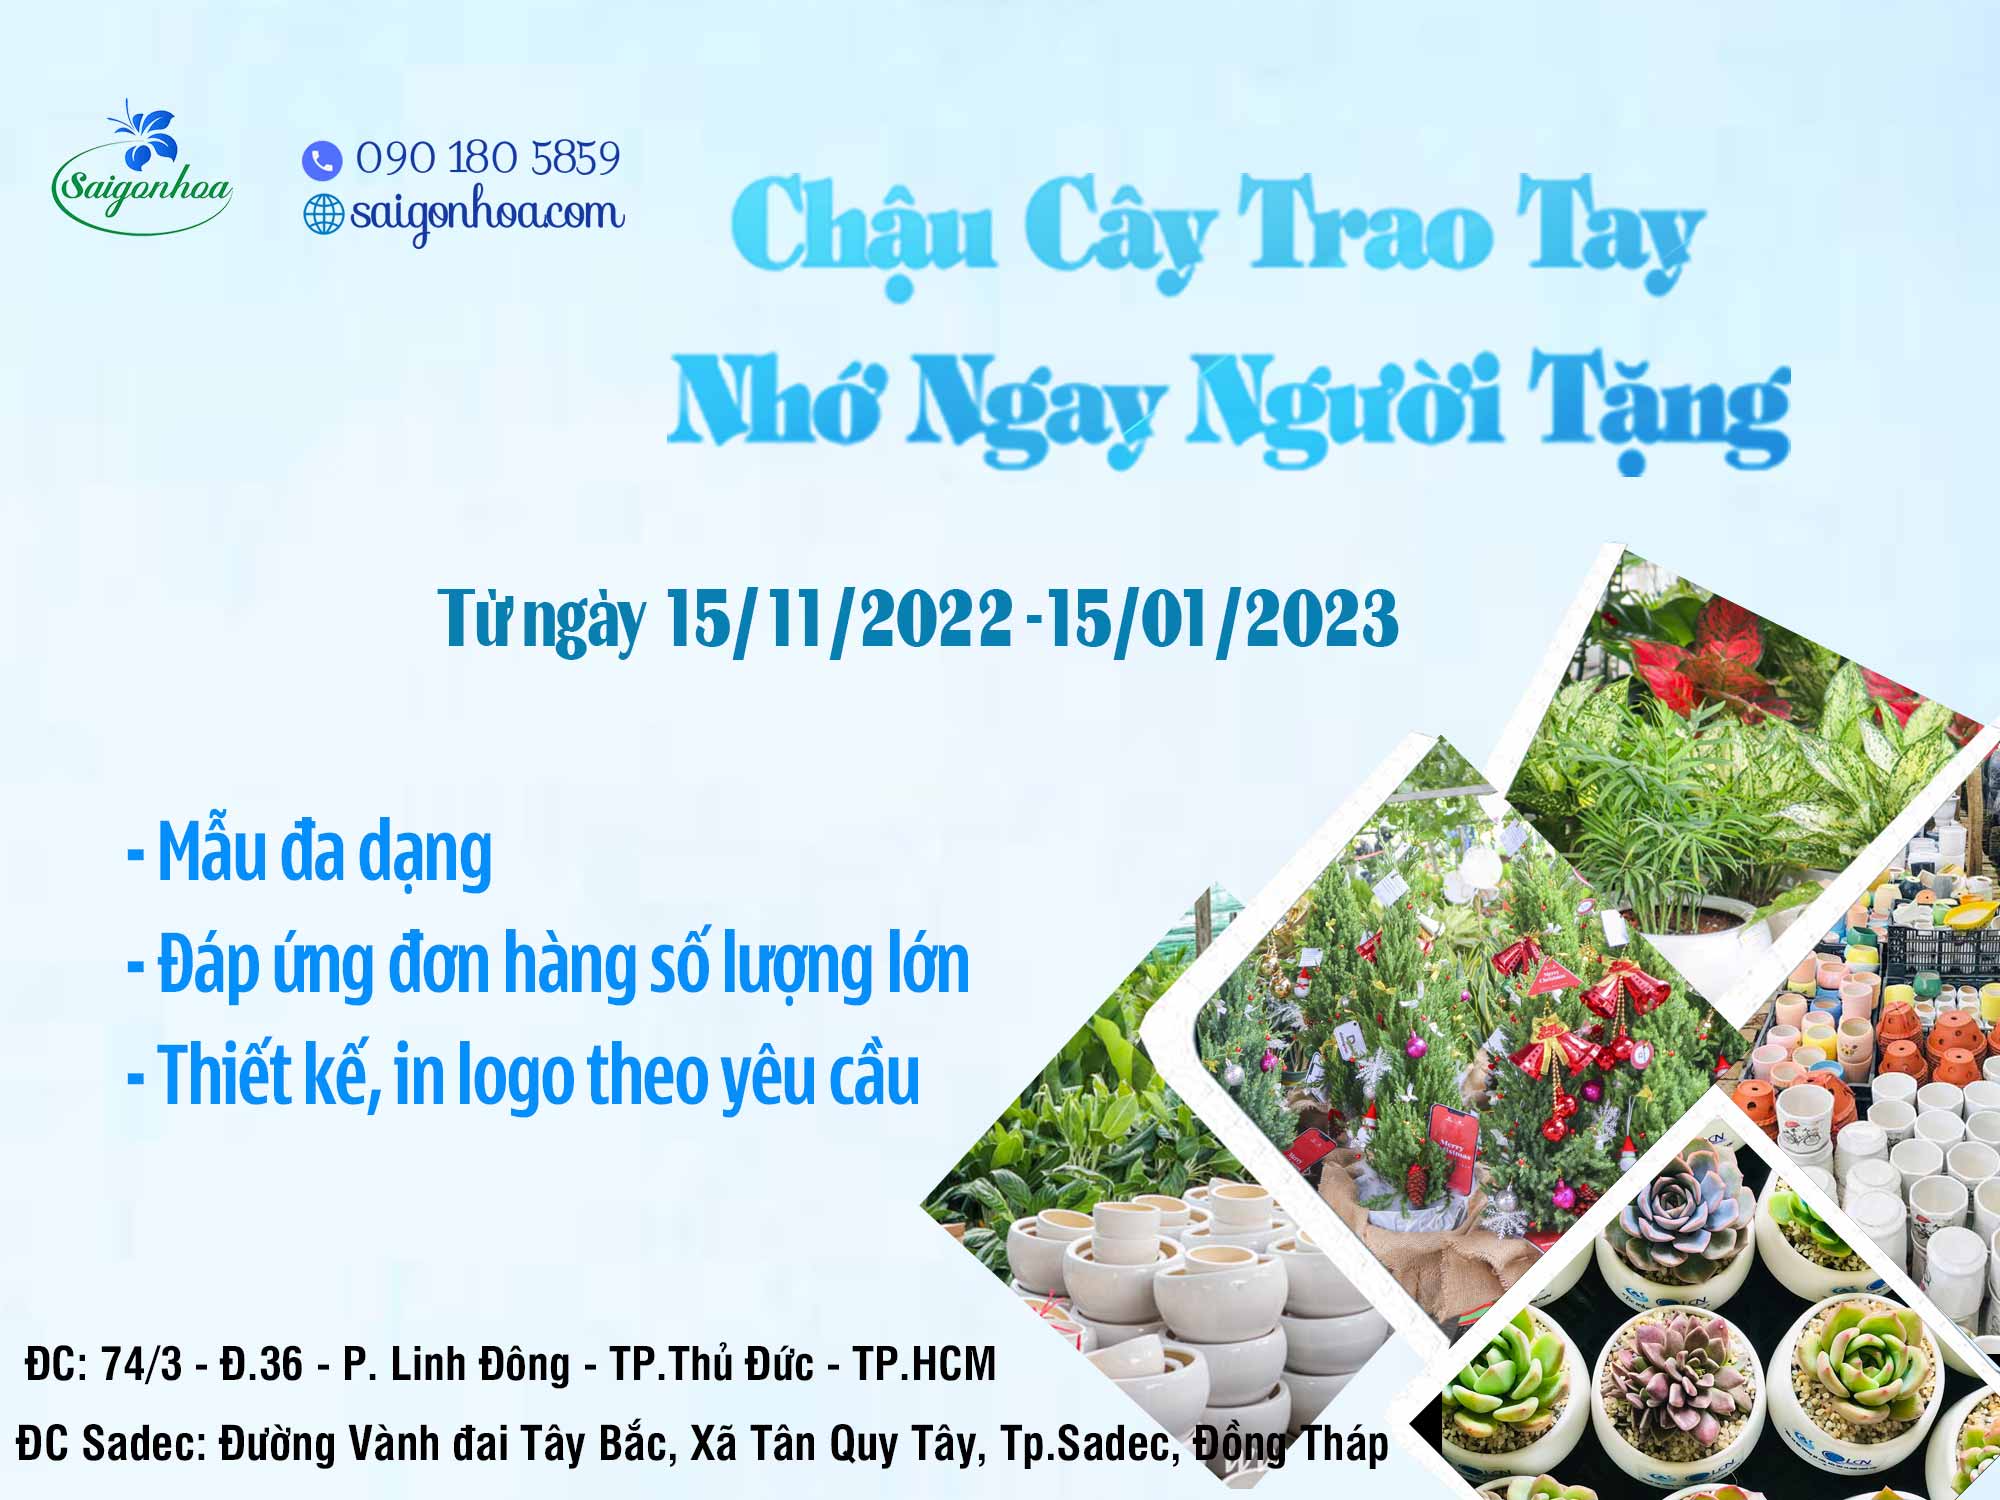 To Roi Ctkm Qua Tang Chau Cay